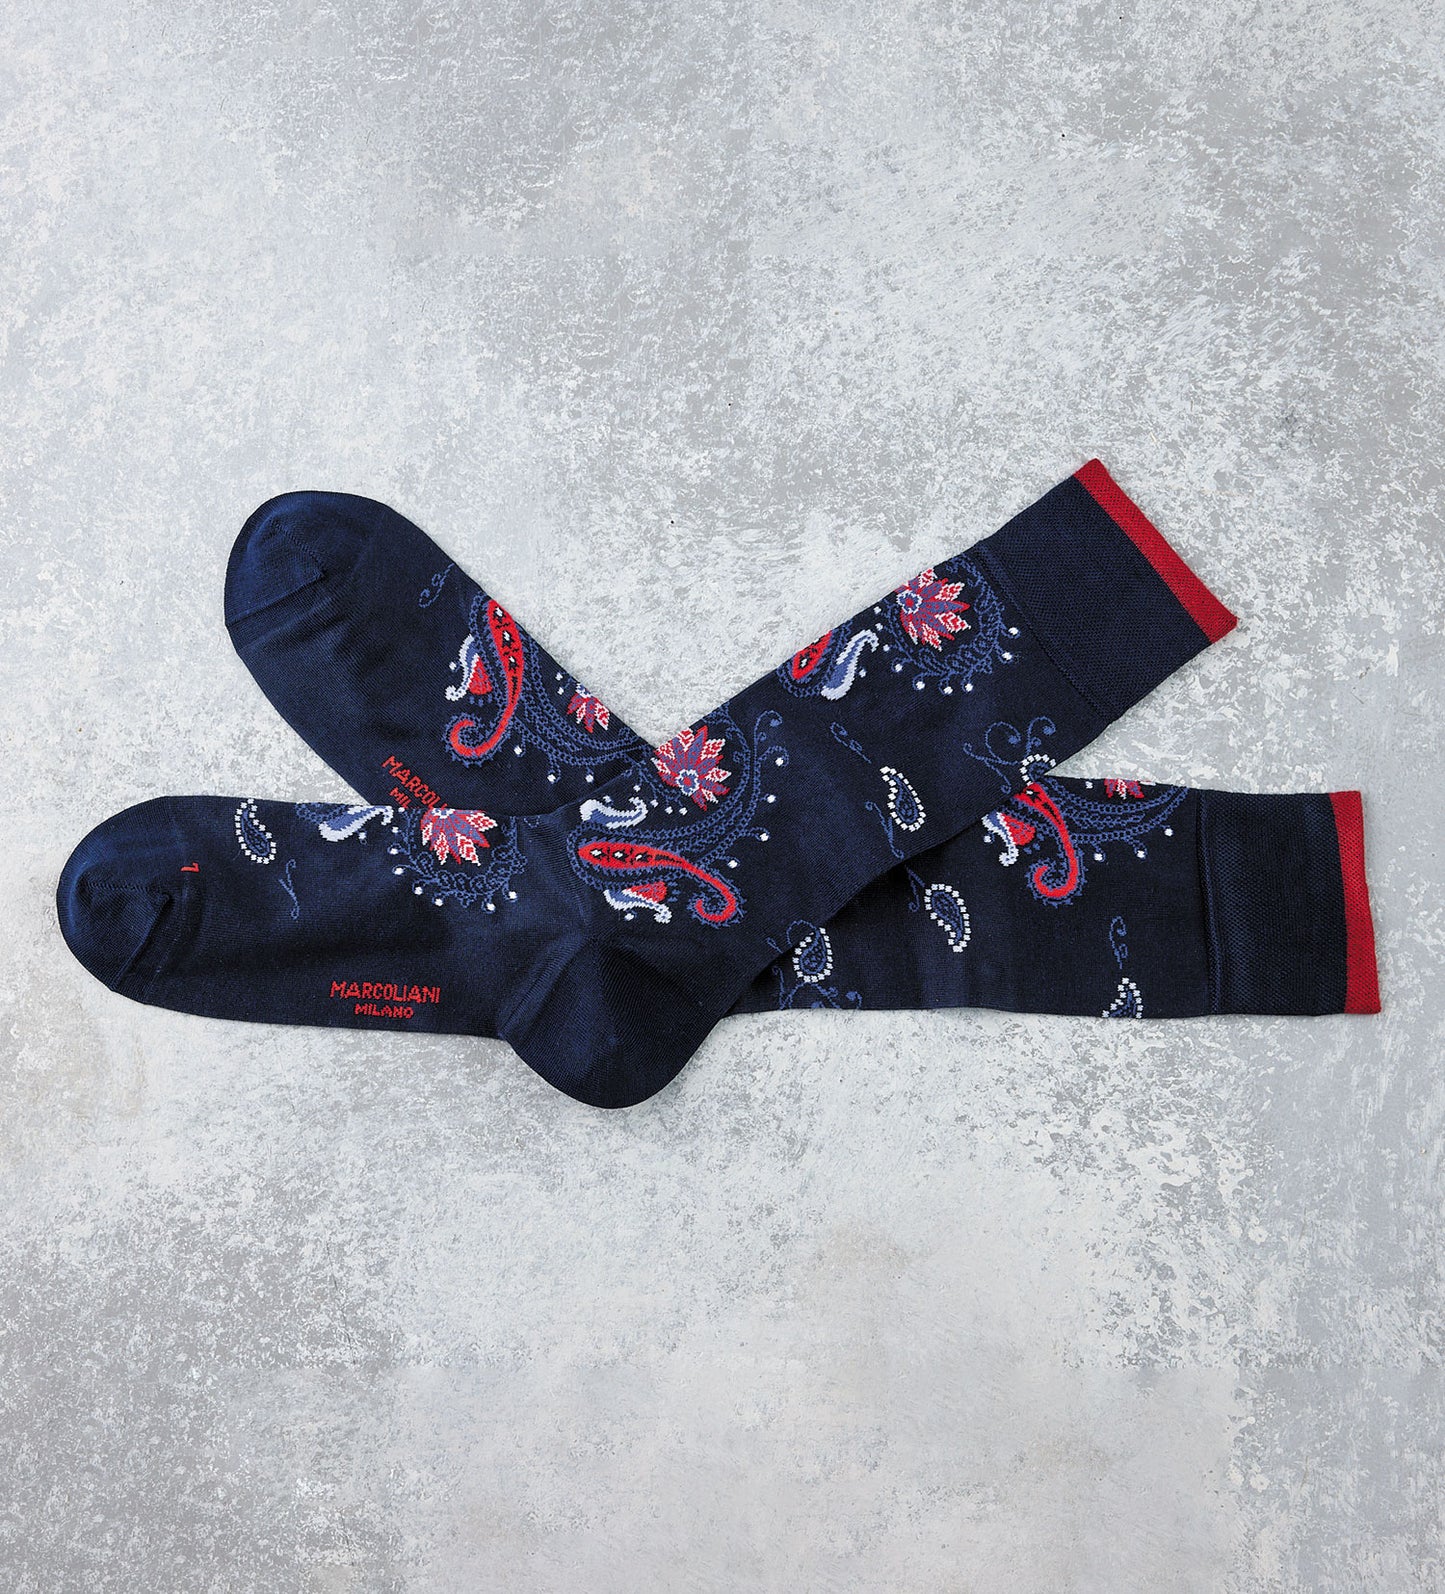 Marcoliani Paisley Flower Socks